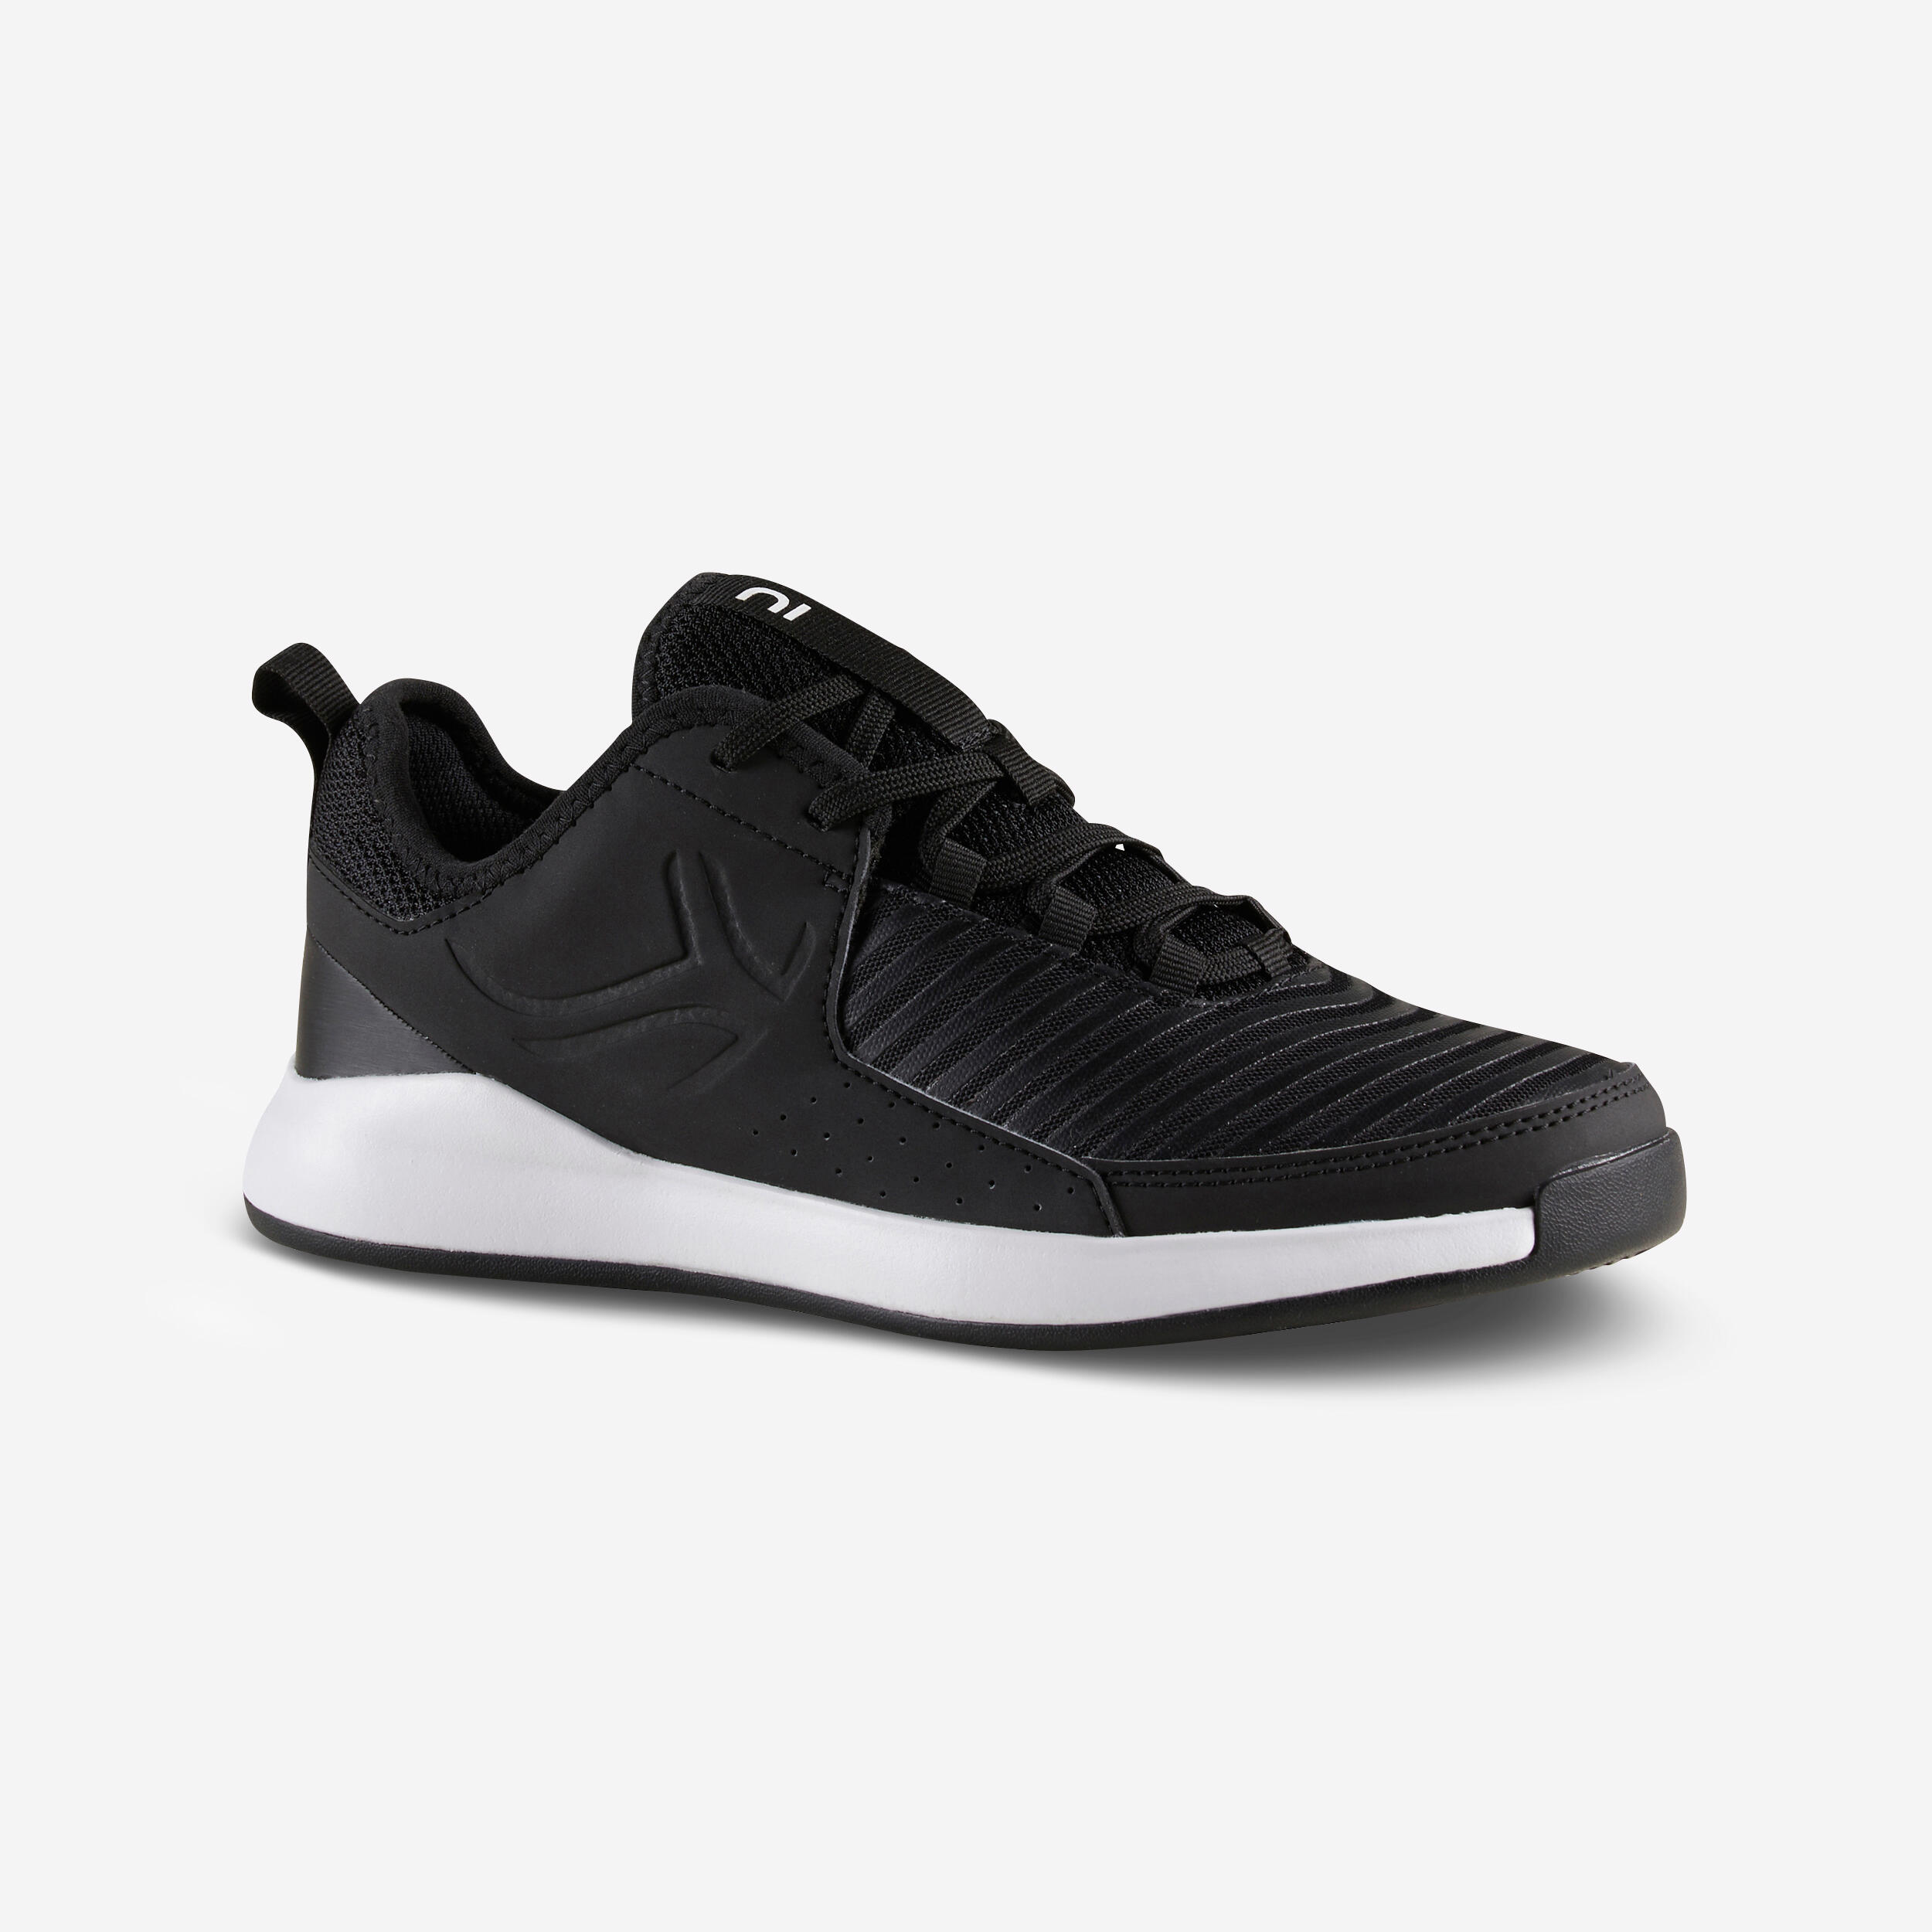 ARTENGO Women's Tennis Shoes TS 130 - Black